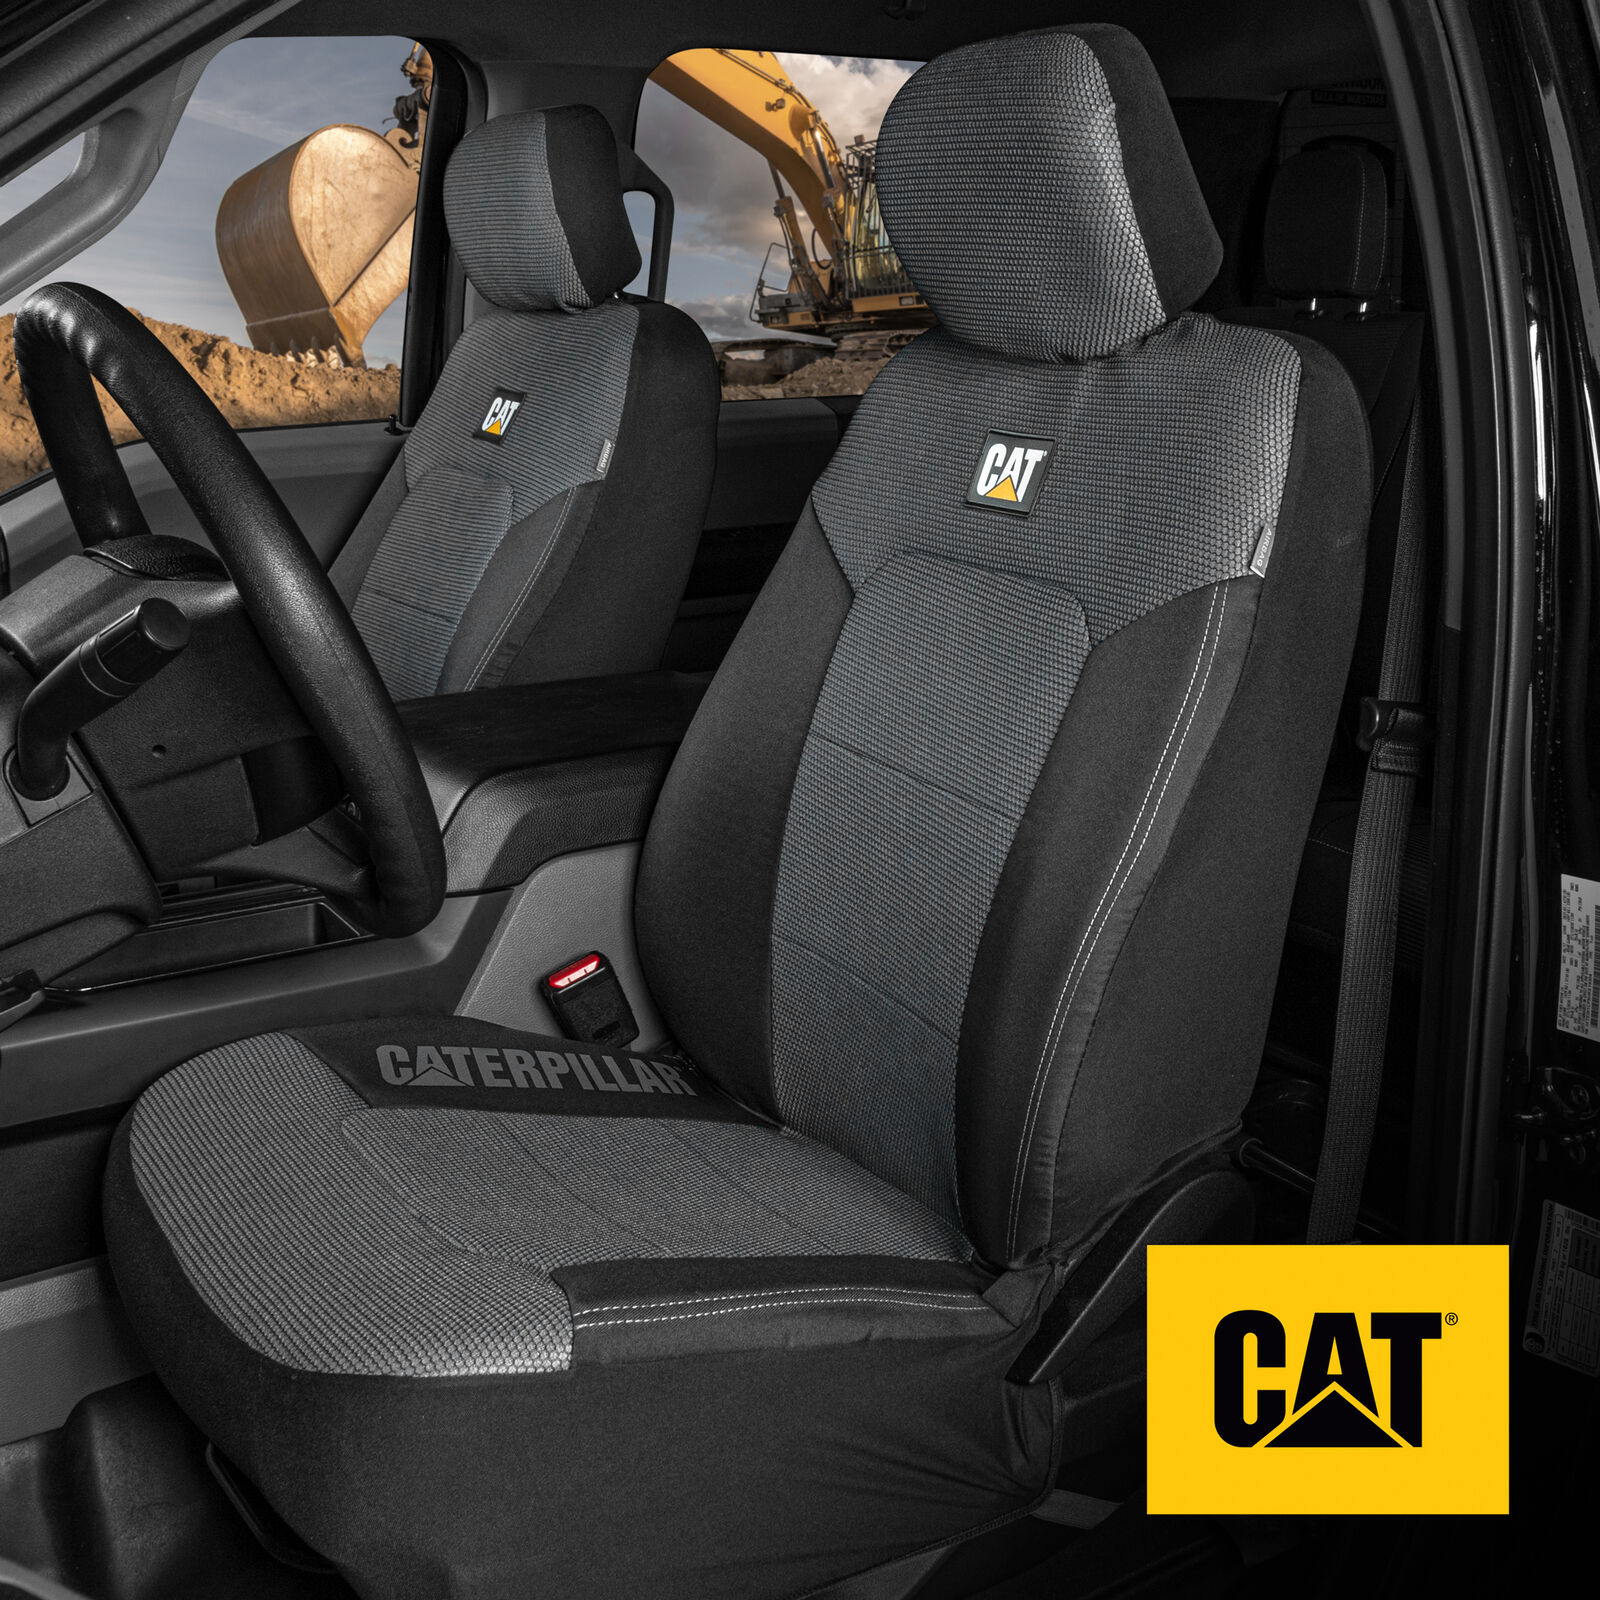 CAT MeshFlex Front Seat Covers Set - Black & Gray Truck SUV Van Car Seat Covers